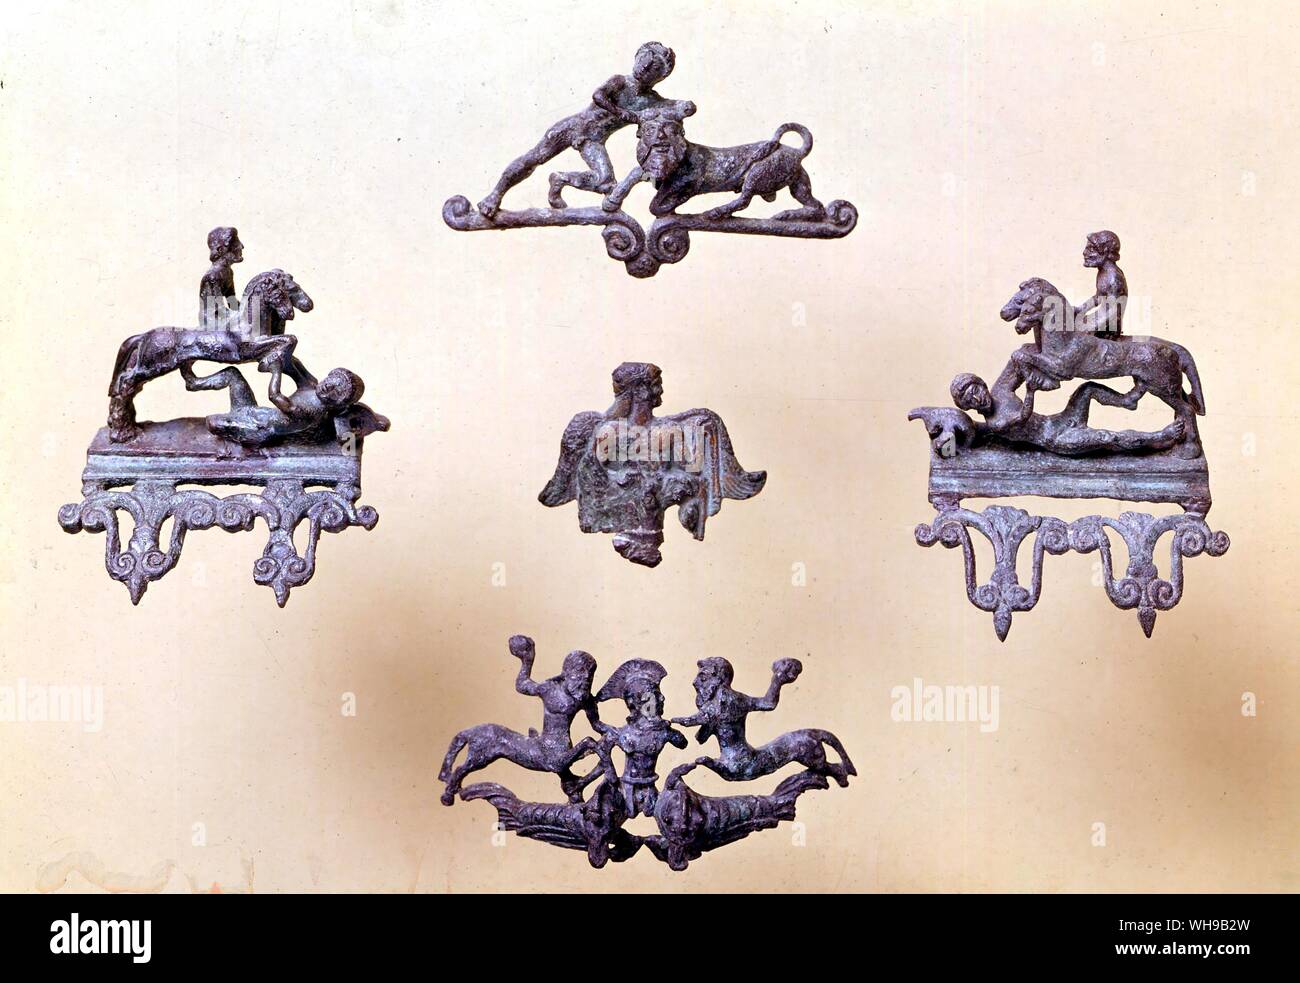 Grupos de bronce en miniatura romana de dec de casco finales de siglo 6 muestra Hercules Achelous dos jinetes guerreros caídos montar abajo 2 centauros superar kineus Foto de stock